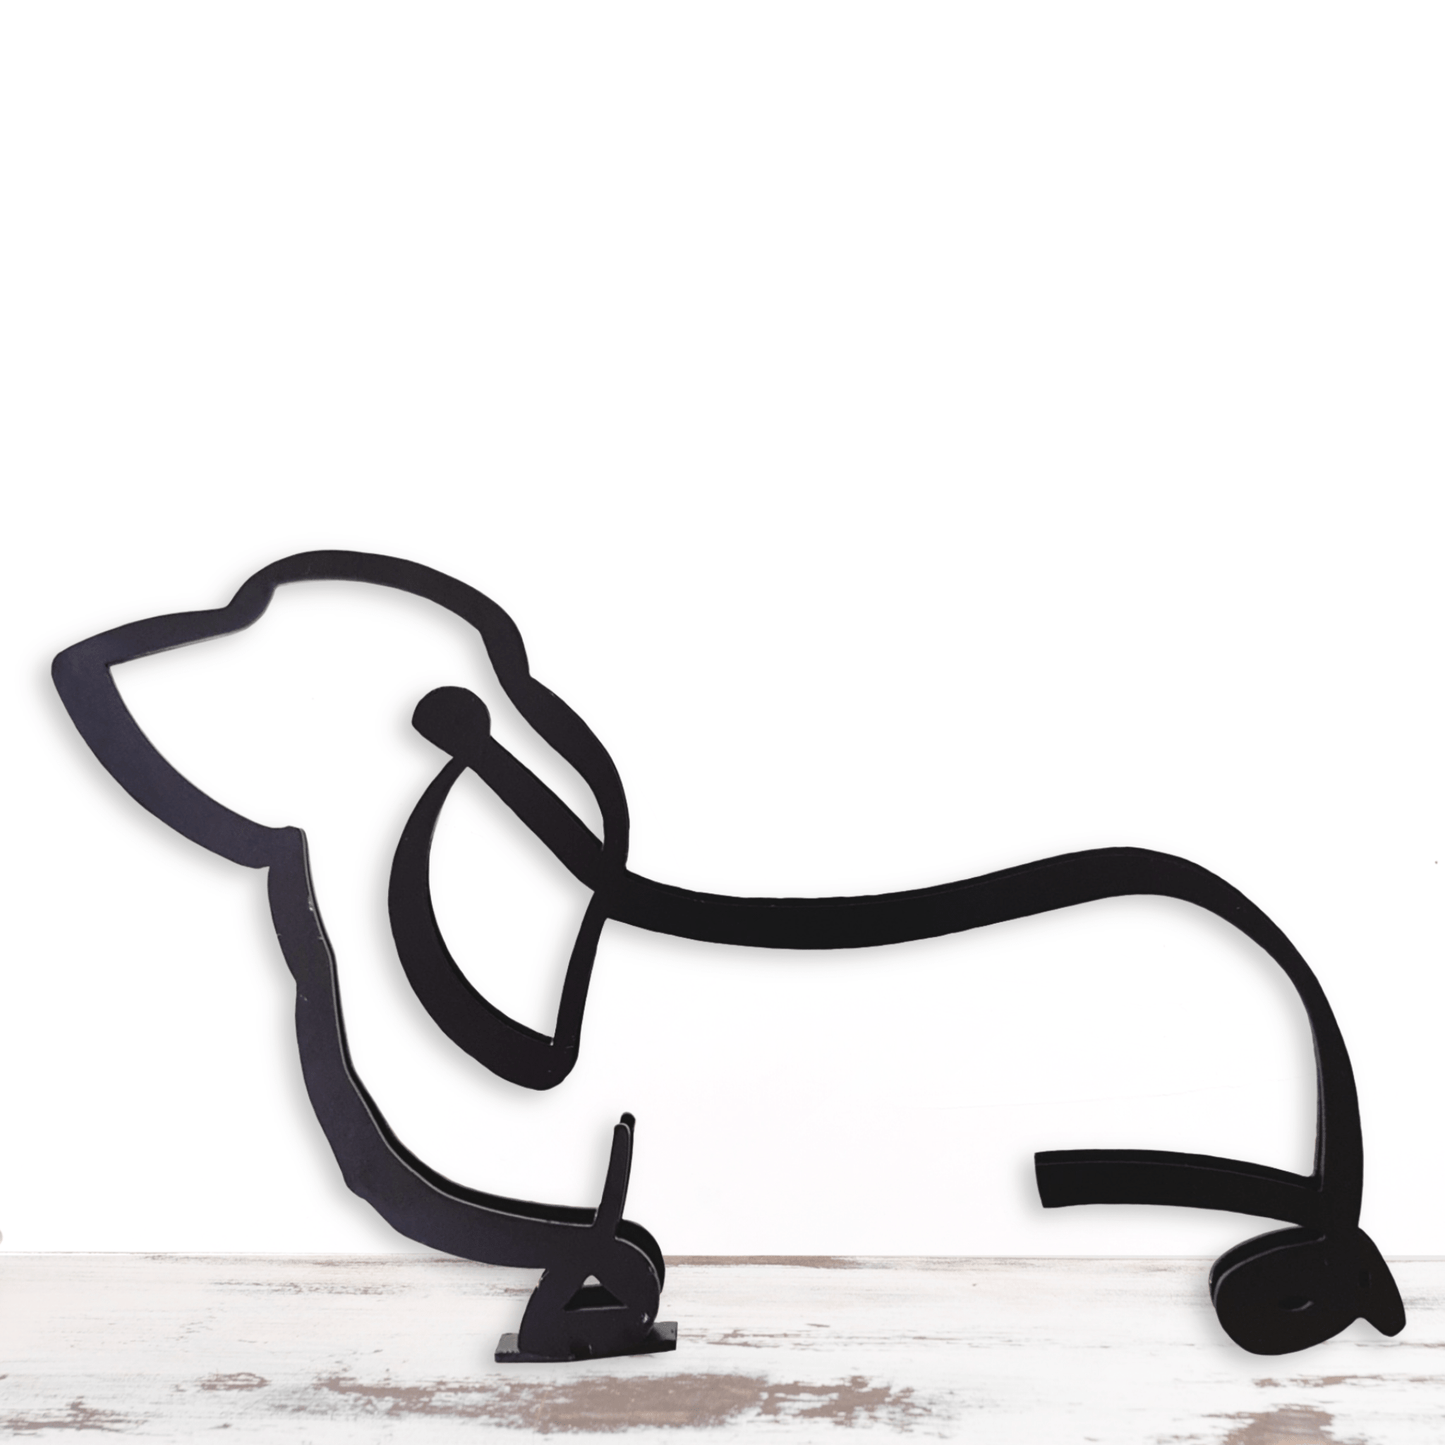 Cute Minimalistic Basset Hound Metal Dog Sculpture Statue - Doggo - Zone